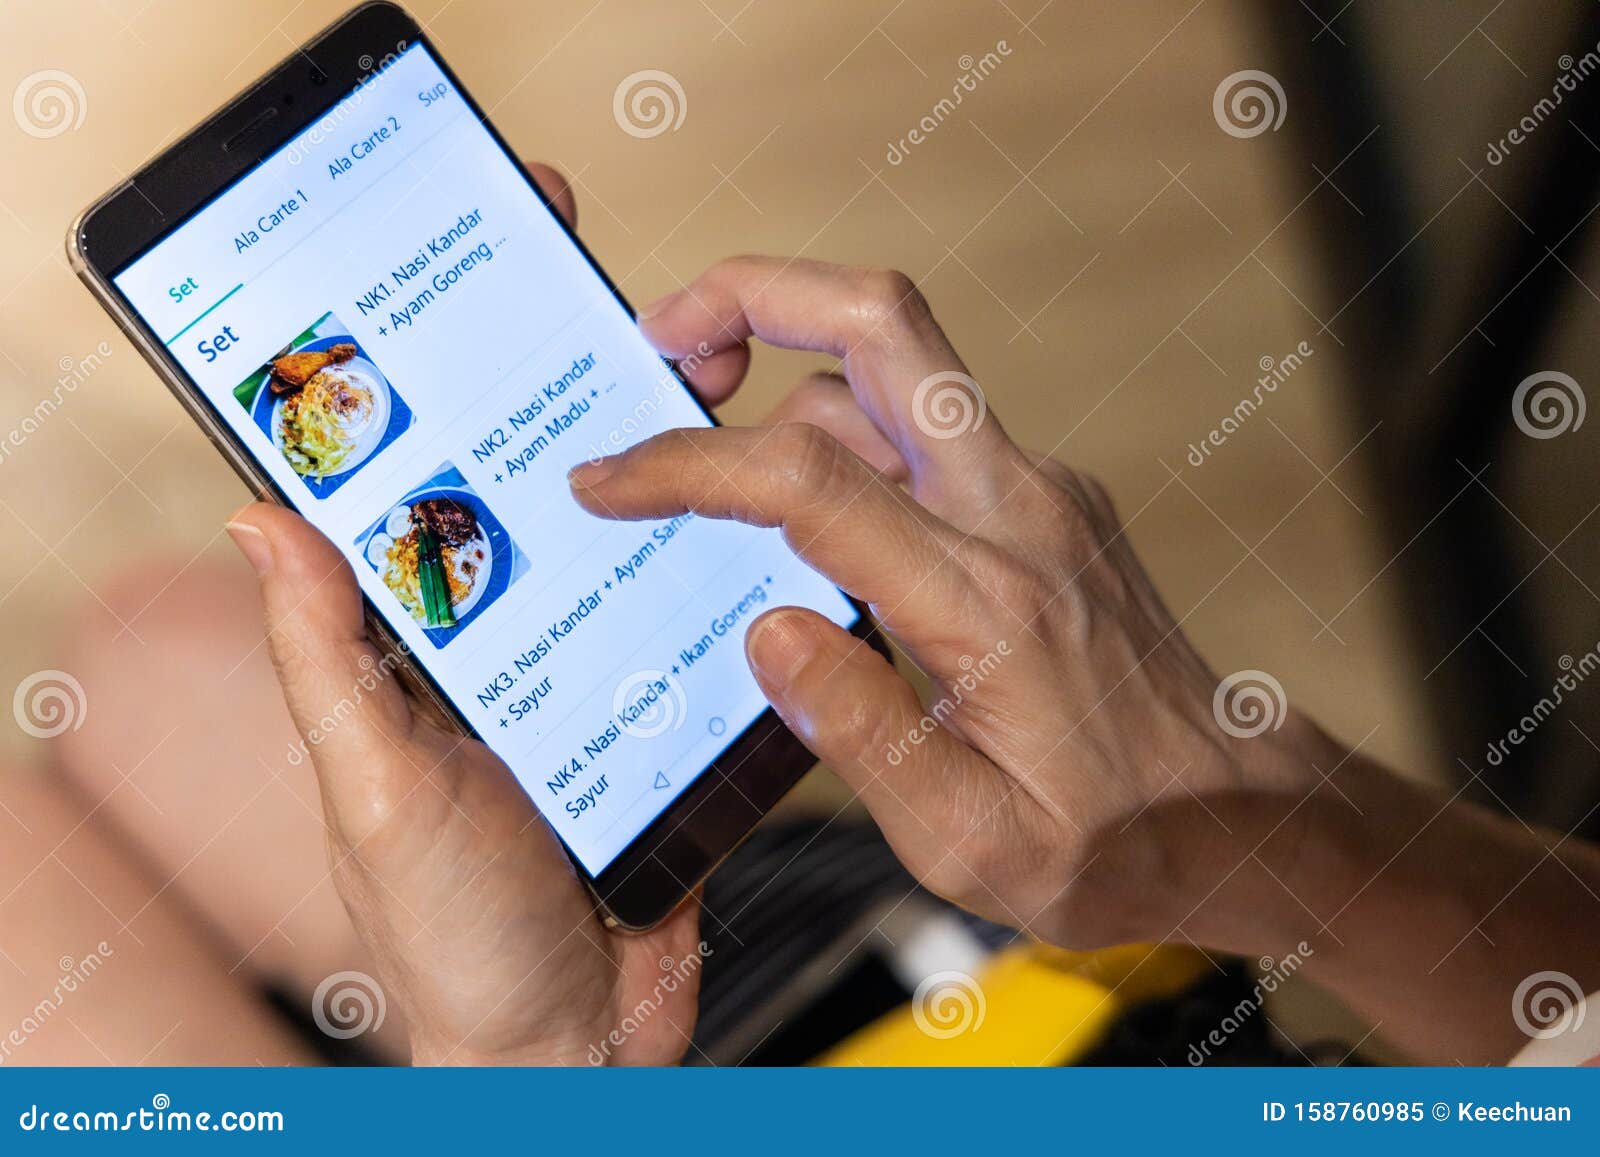 person ordering food online via app on smart phone